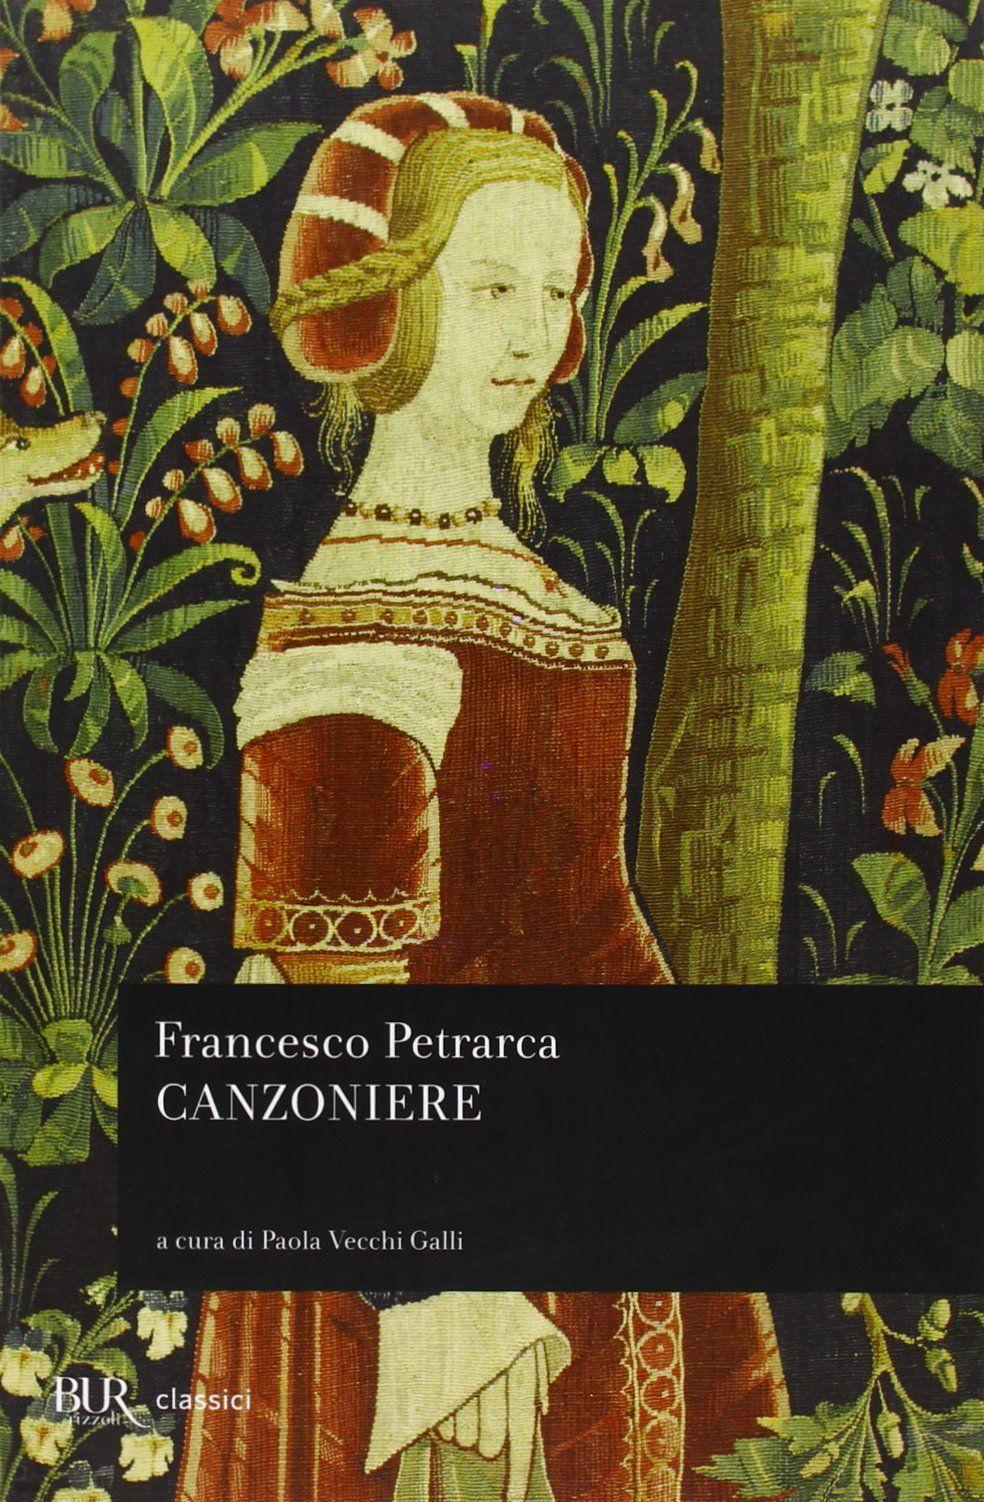 Libro "Canzoniere" di Francesco Petrarca